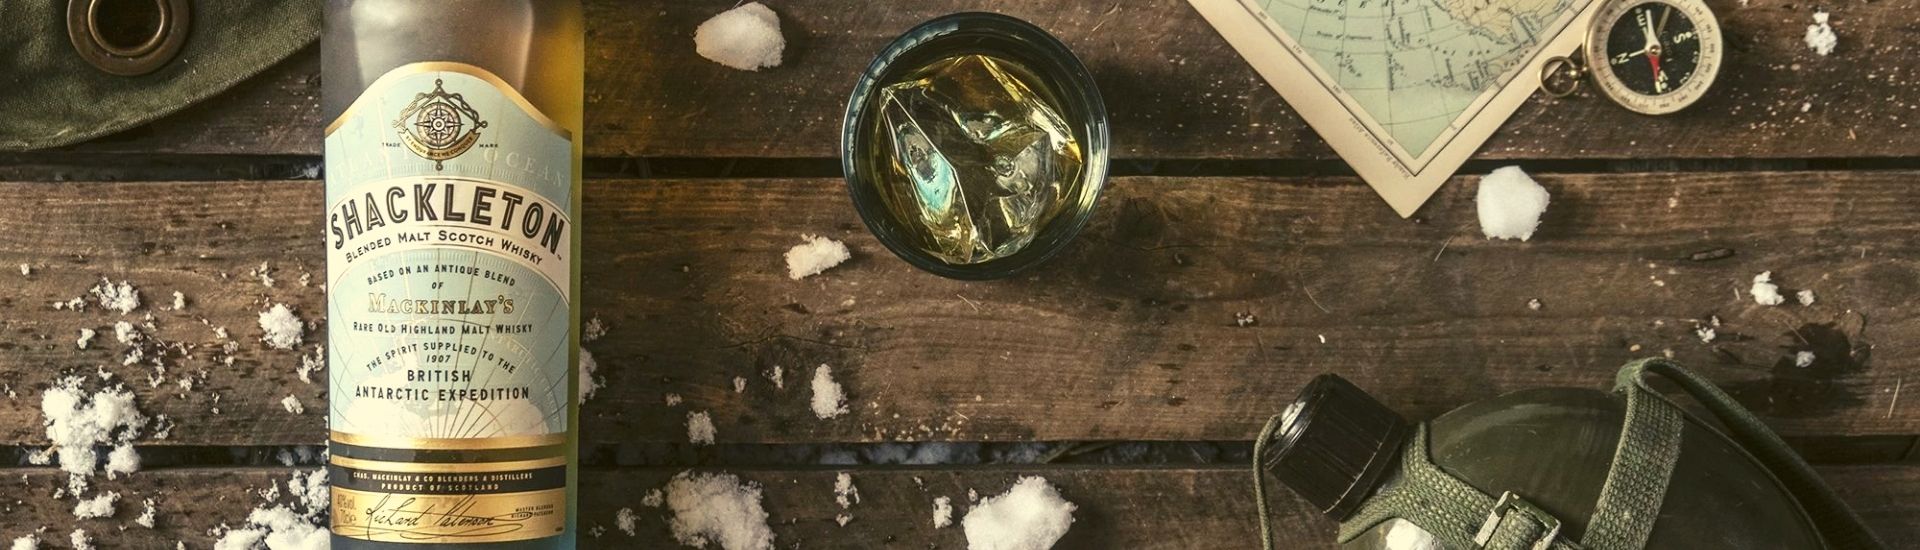 shackleton whisky bottle on table